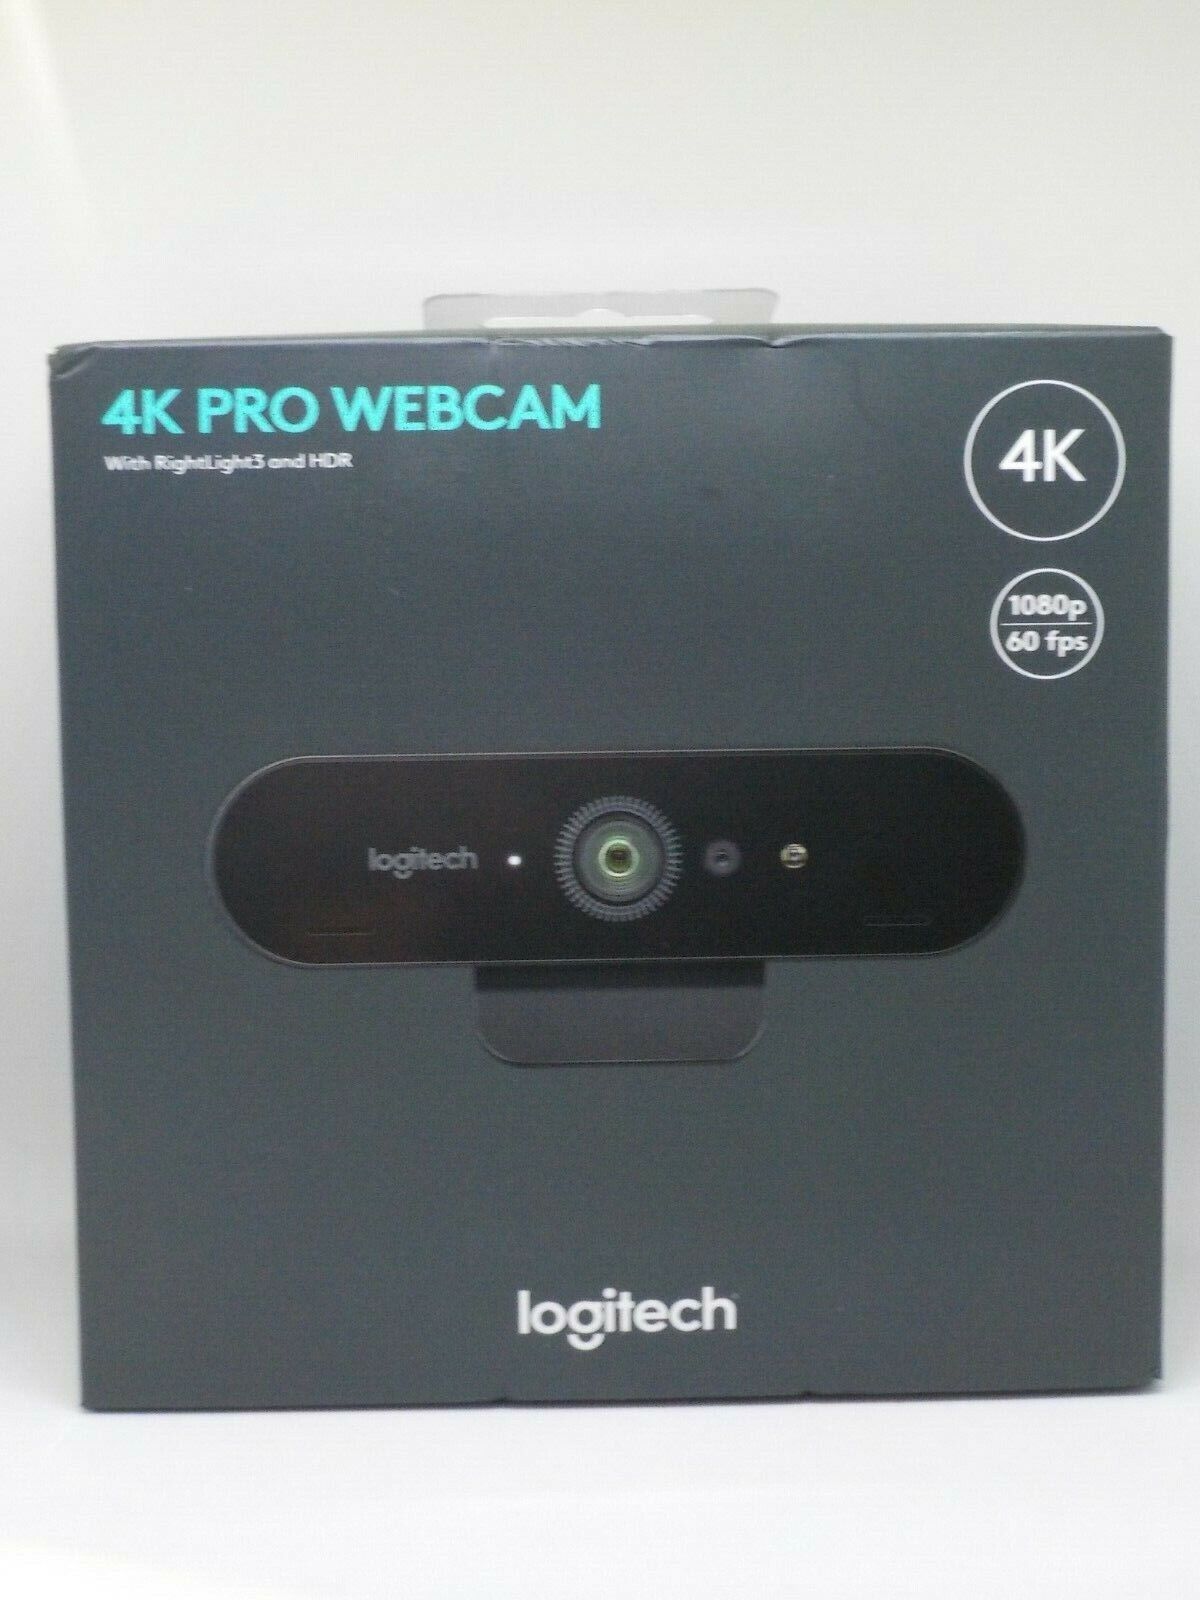 New Logitech 4K Webcam-90ps-USB 3.0-4096 X 2160 Video-Auto-Focus 5X Digital Zoom